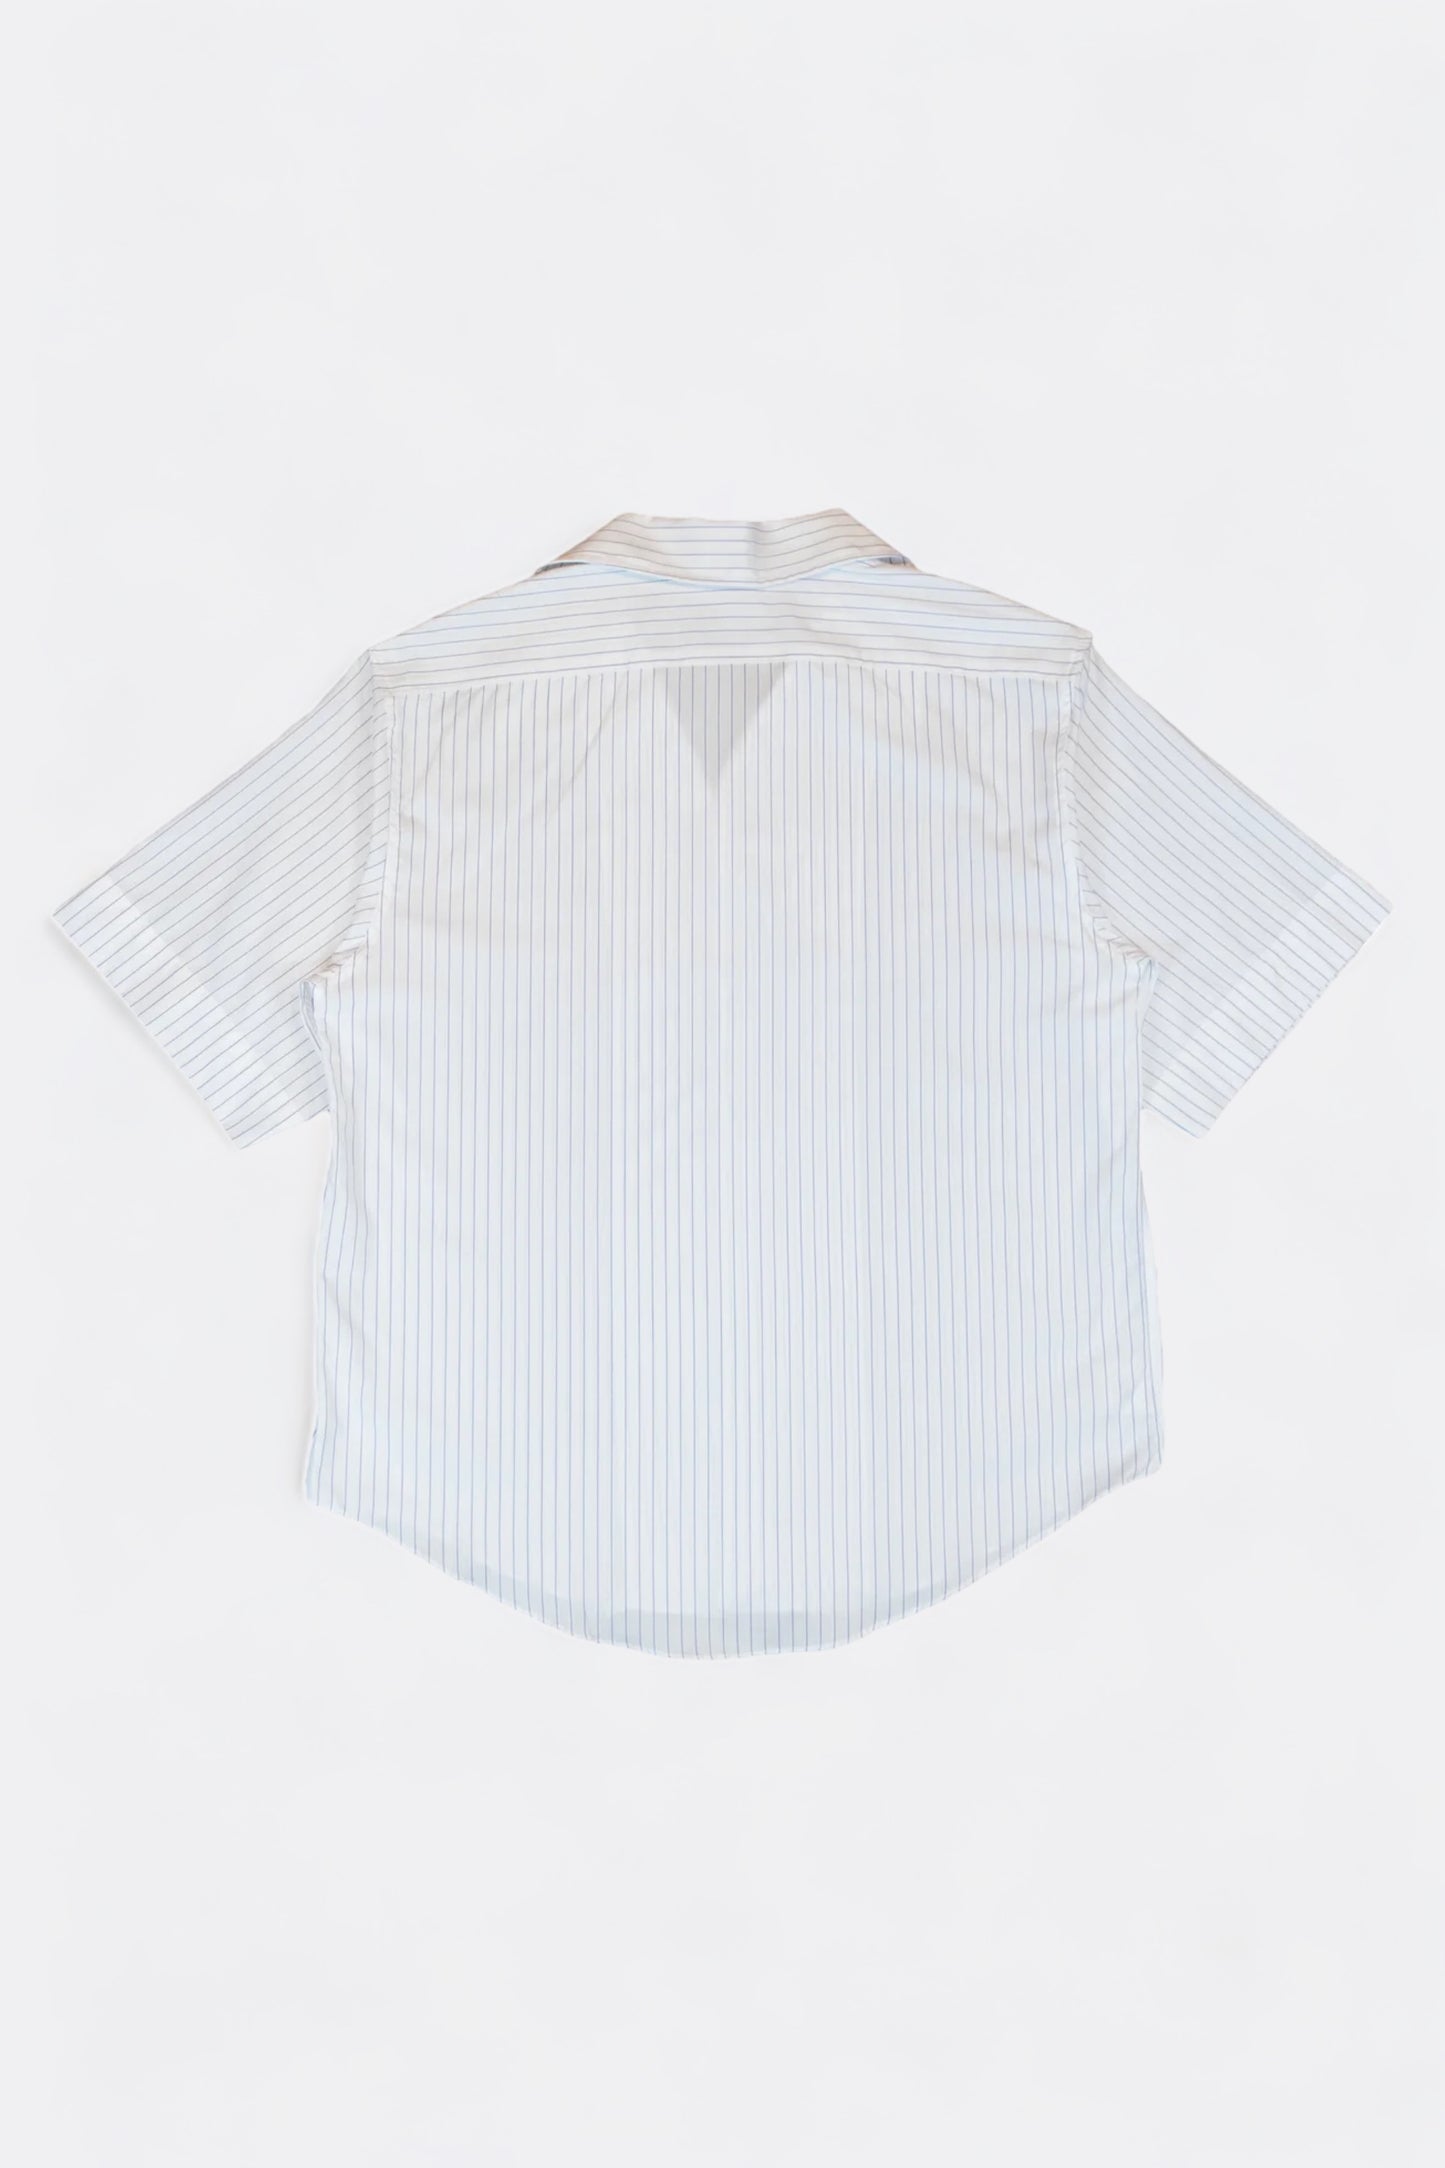 Camisas Manolo - School Shirt (Blue Pinstripe / White Poplin)